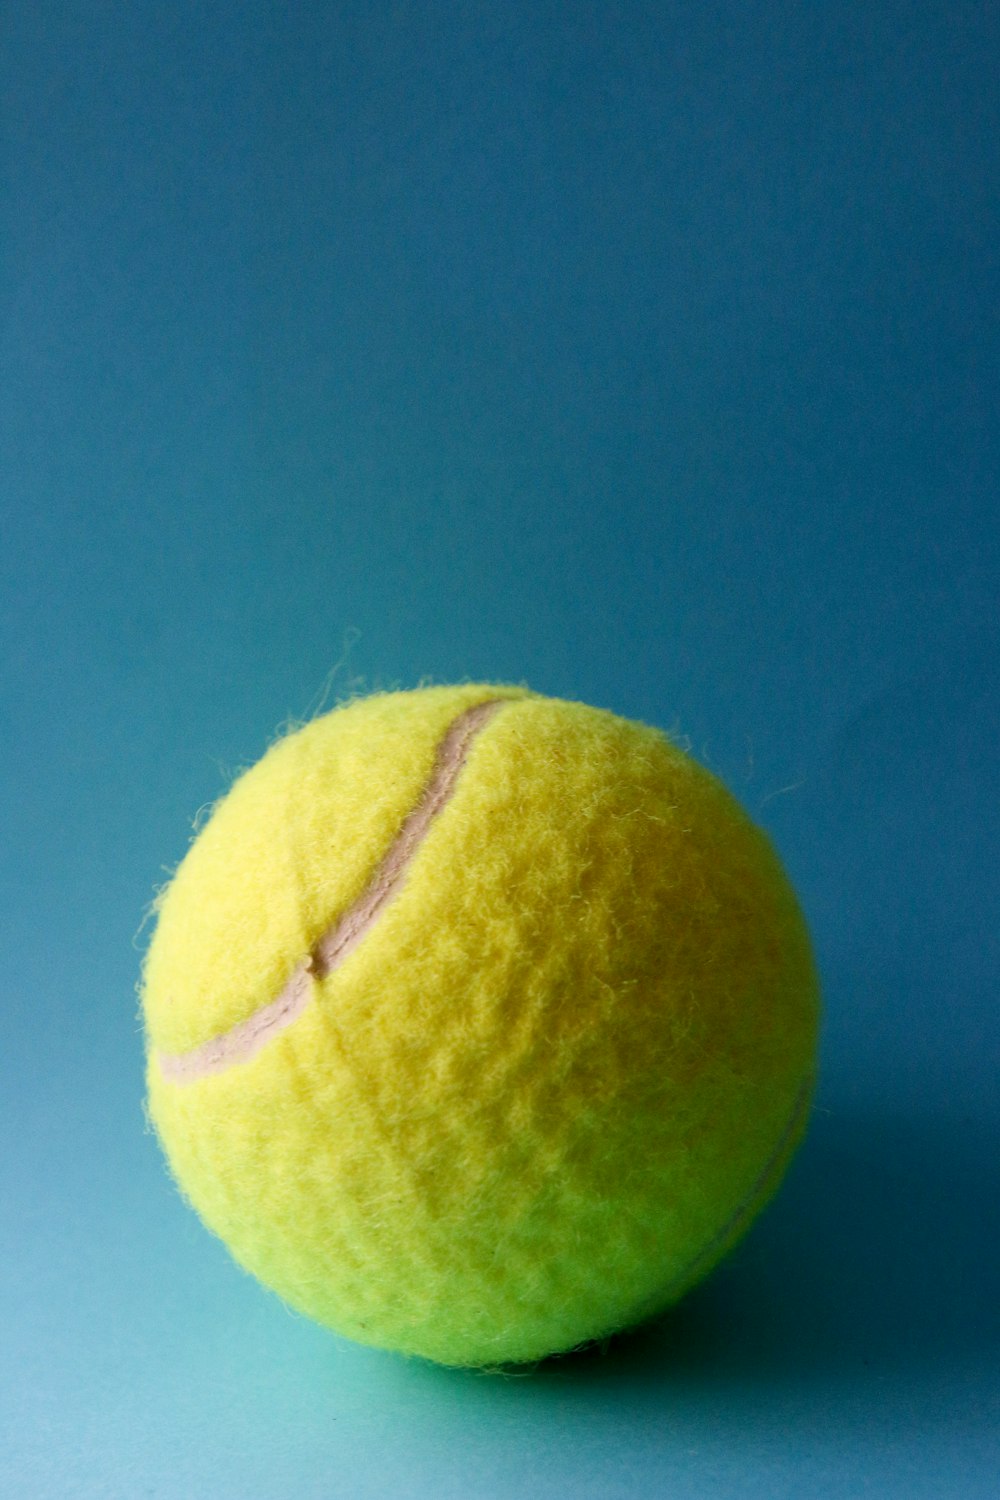 green tennis ball on blue textile